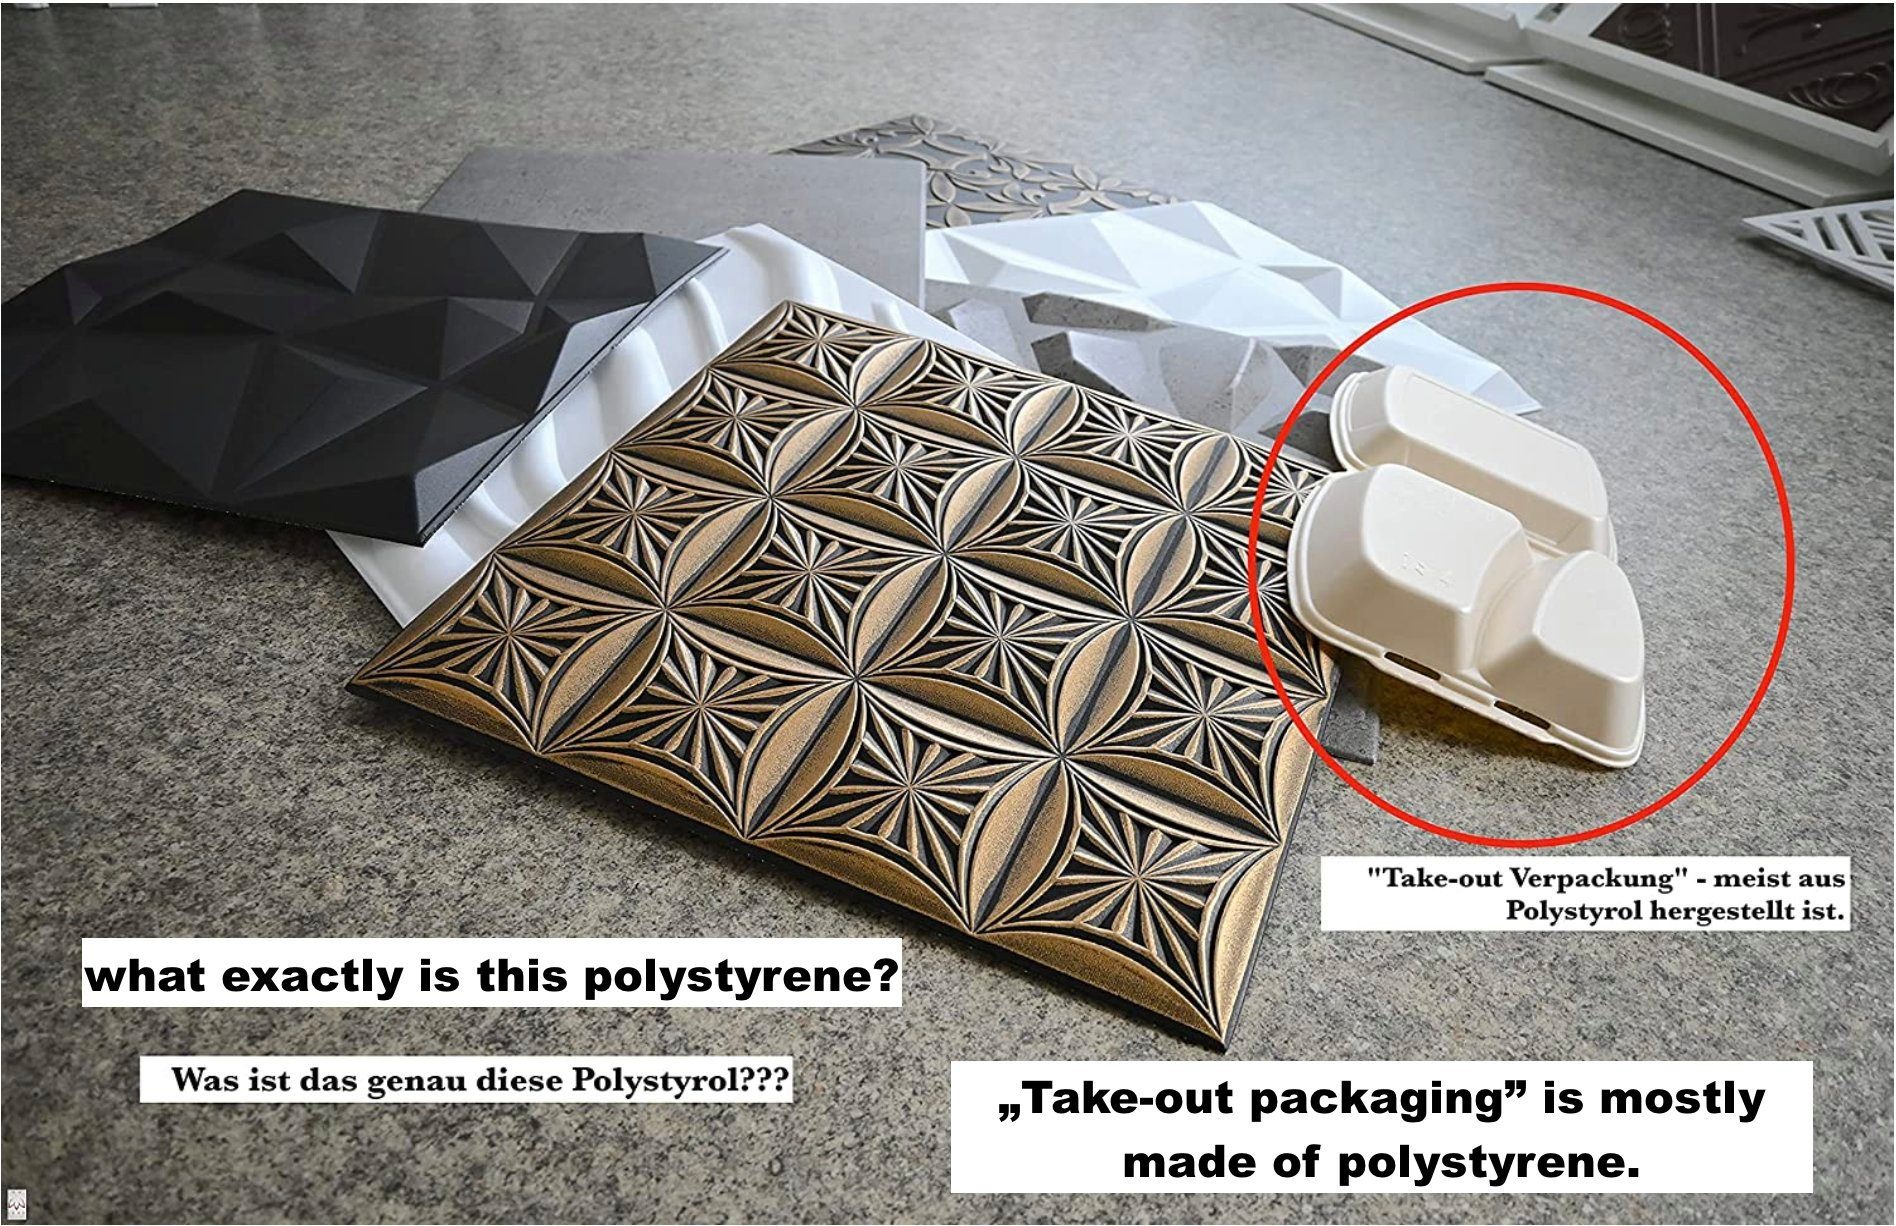 (4qm MATERIAL BxL: Polystyrol cm, ARTIGES! Wandpaneele 3D 3D Wandverkleidung = Deckenpaneele, 50,00x50,00 Stück) IKHEMalarka qm, Black 16 Wandpaneel 0,25 STYROPOR Schells